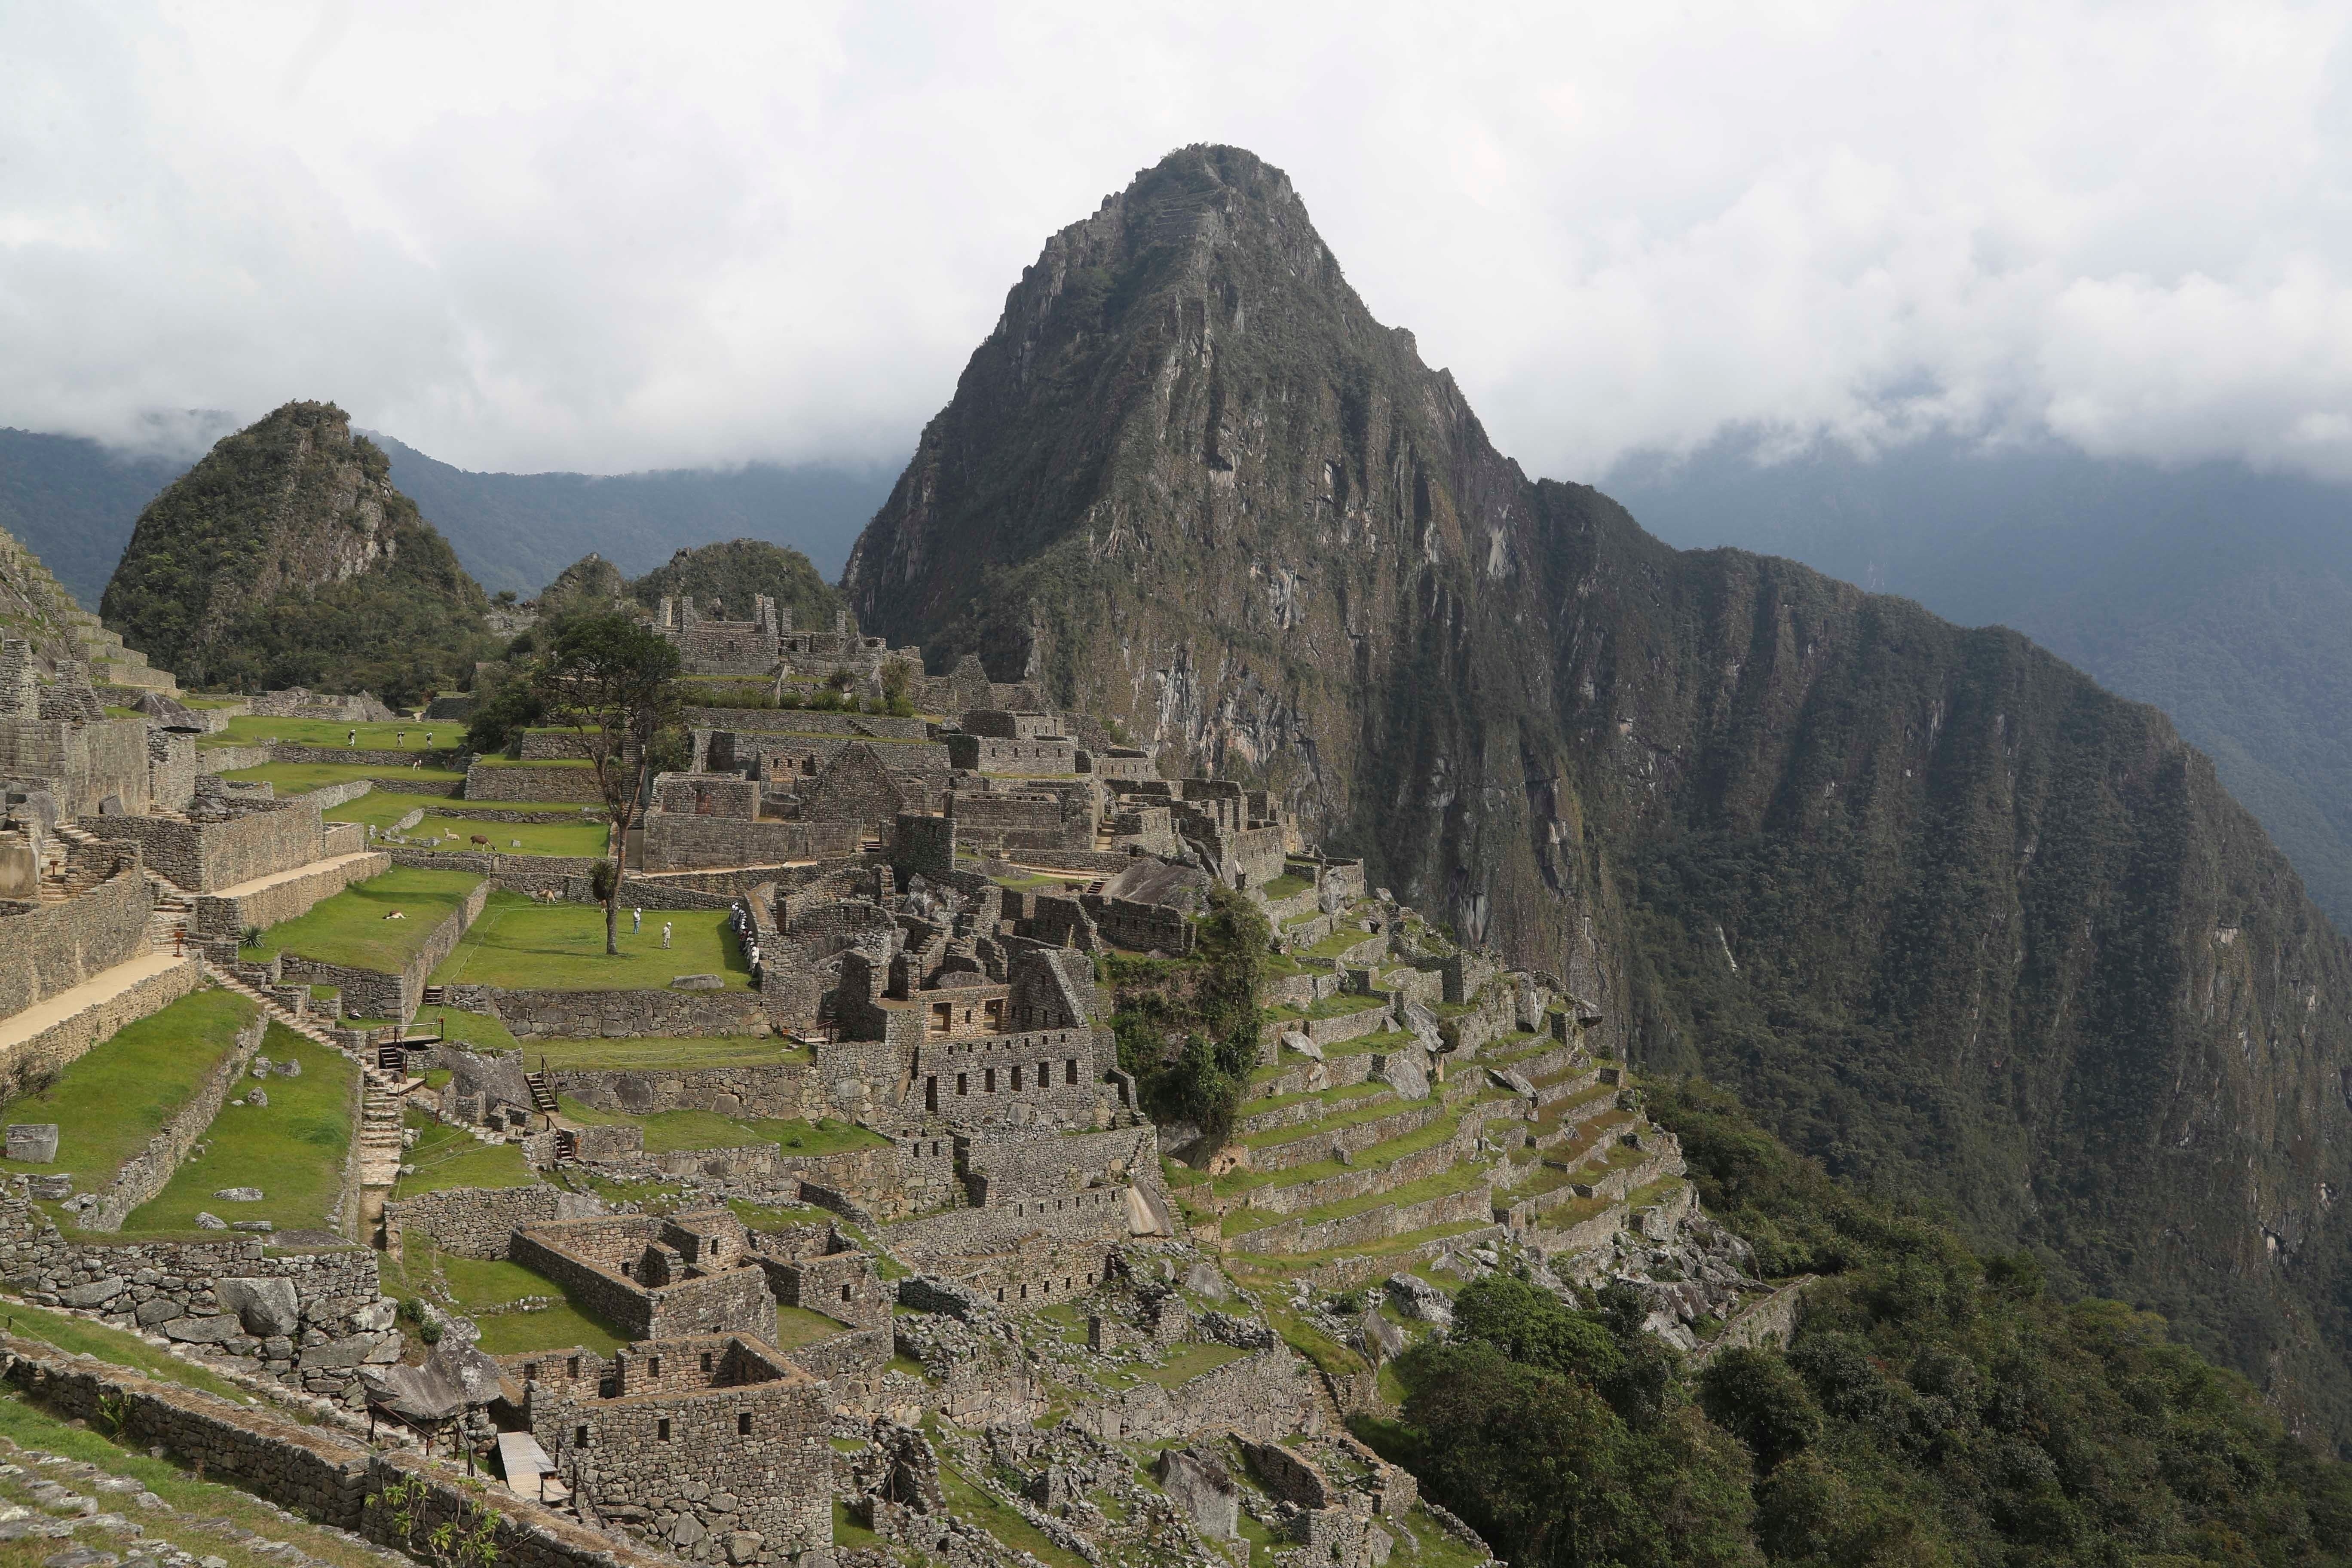 Around 1.5 million people visit Machu Picchu each year